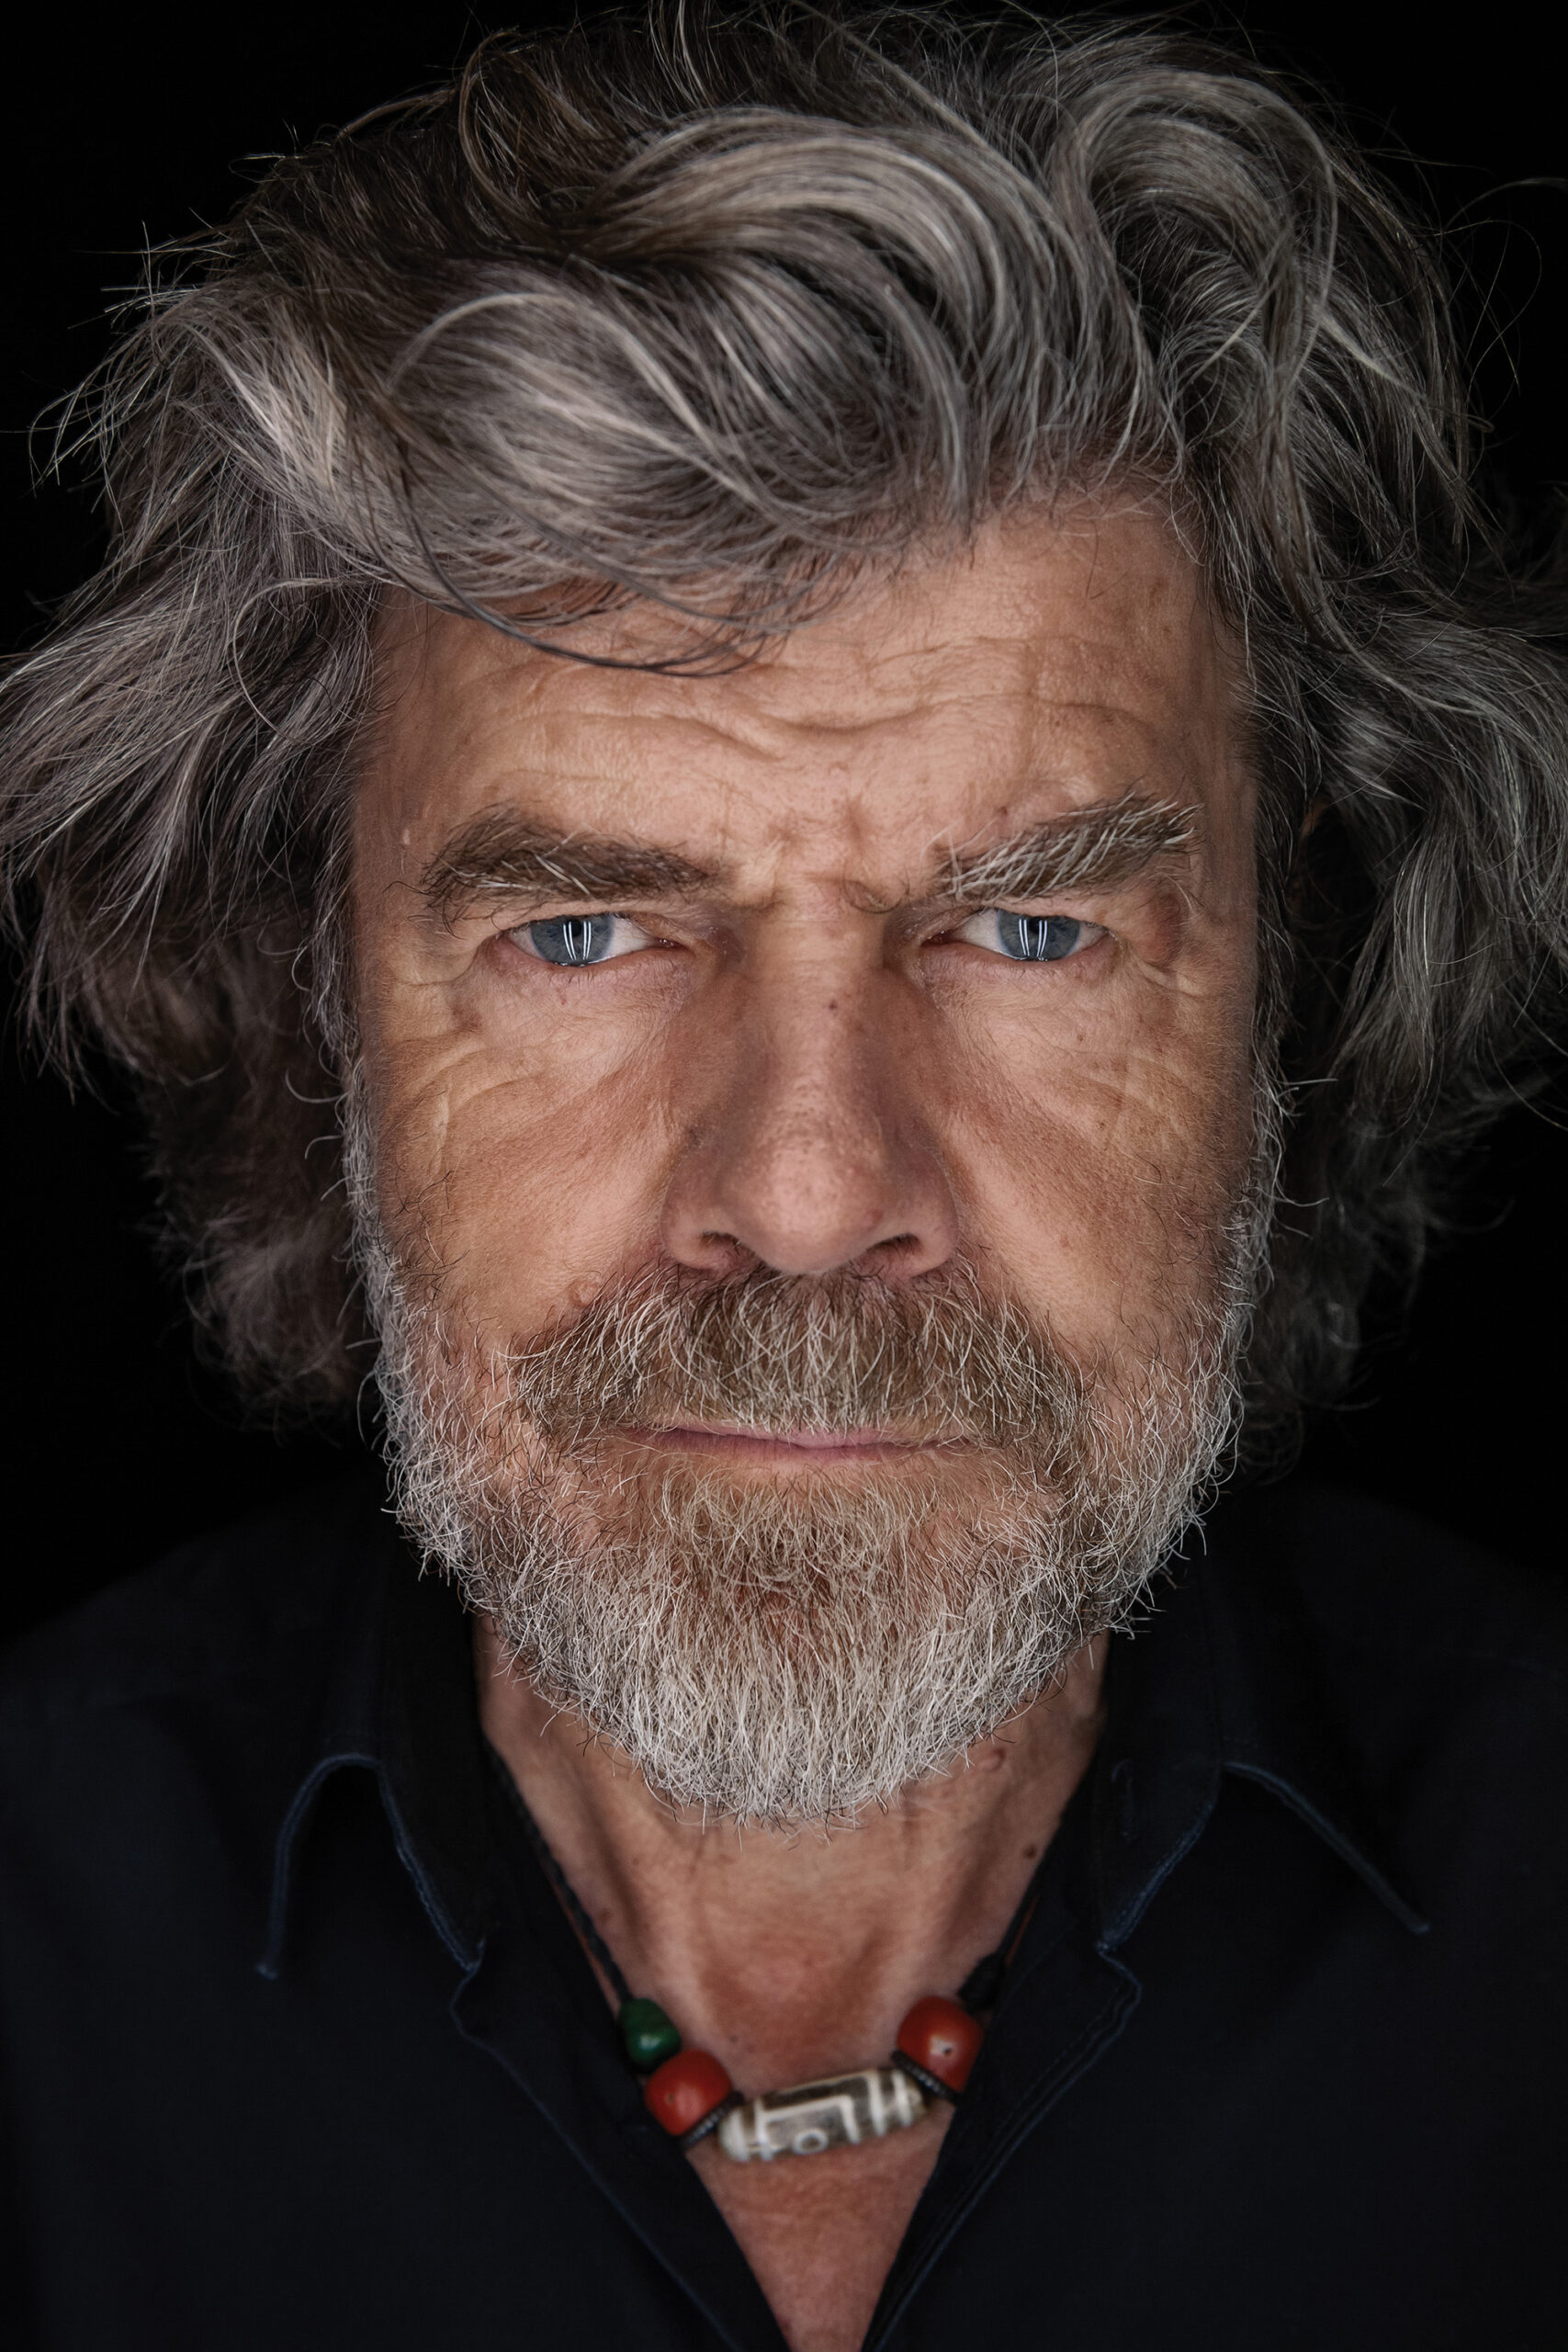 Reinhold Messner photographed by Ronny Kiaulehn